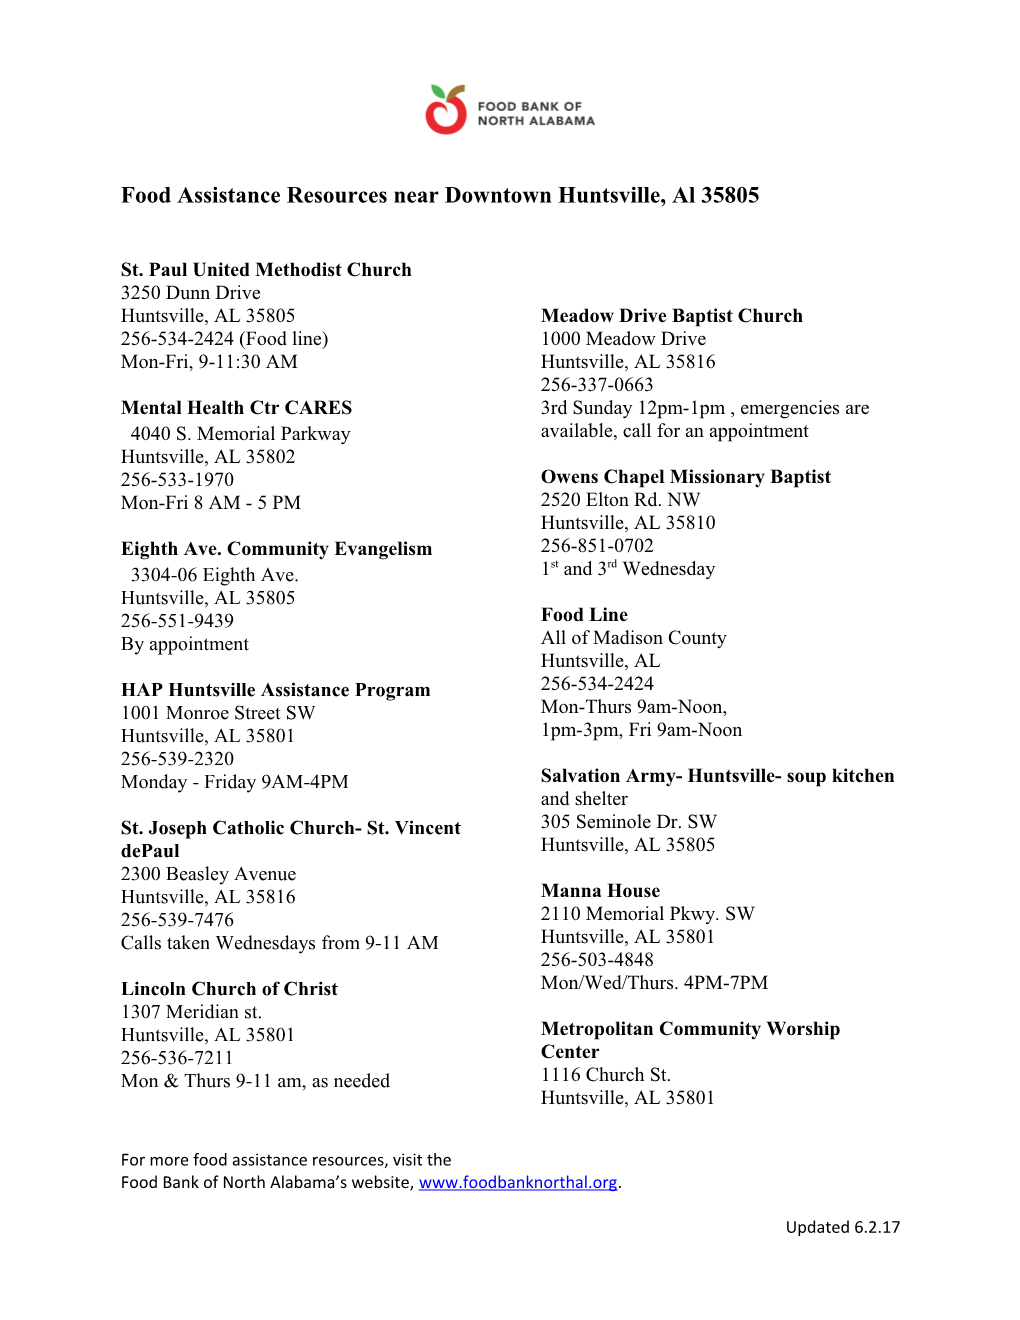 Food Assistance Resources Near Downtown Huntsville, Al 35805